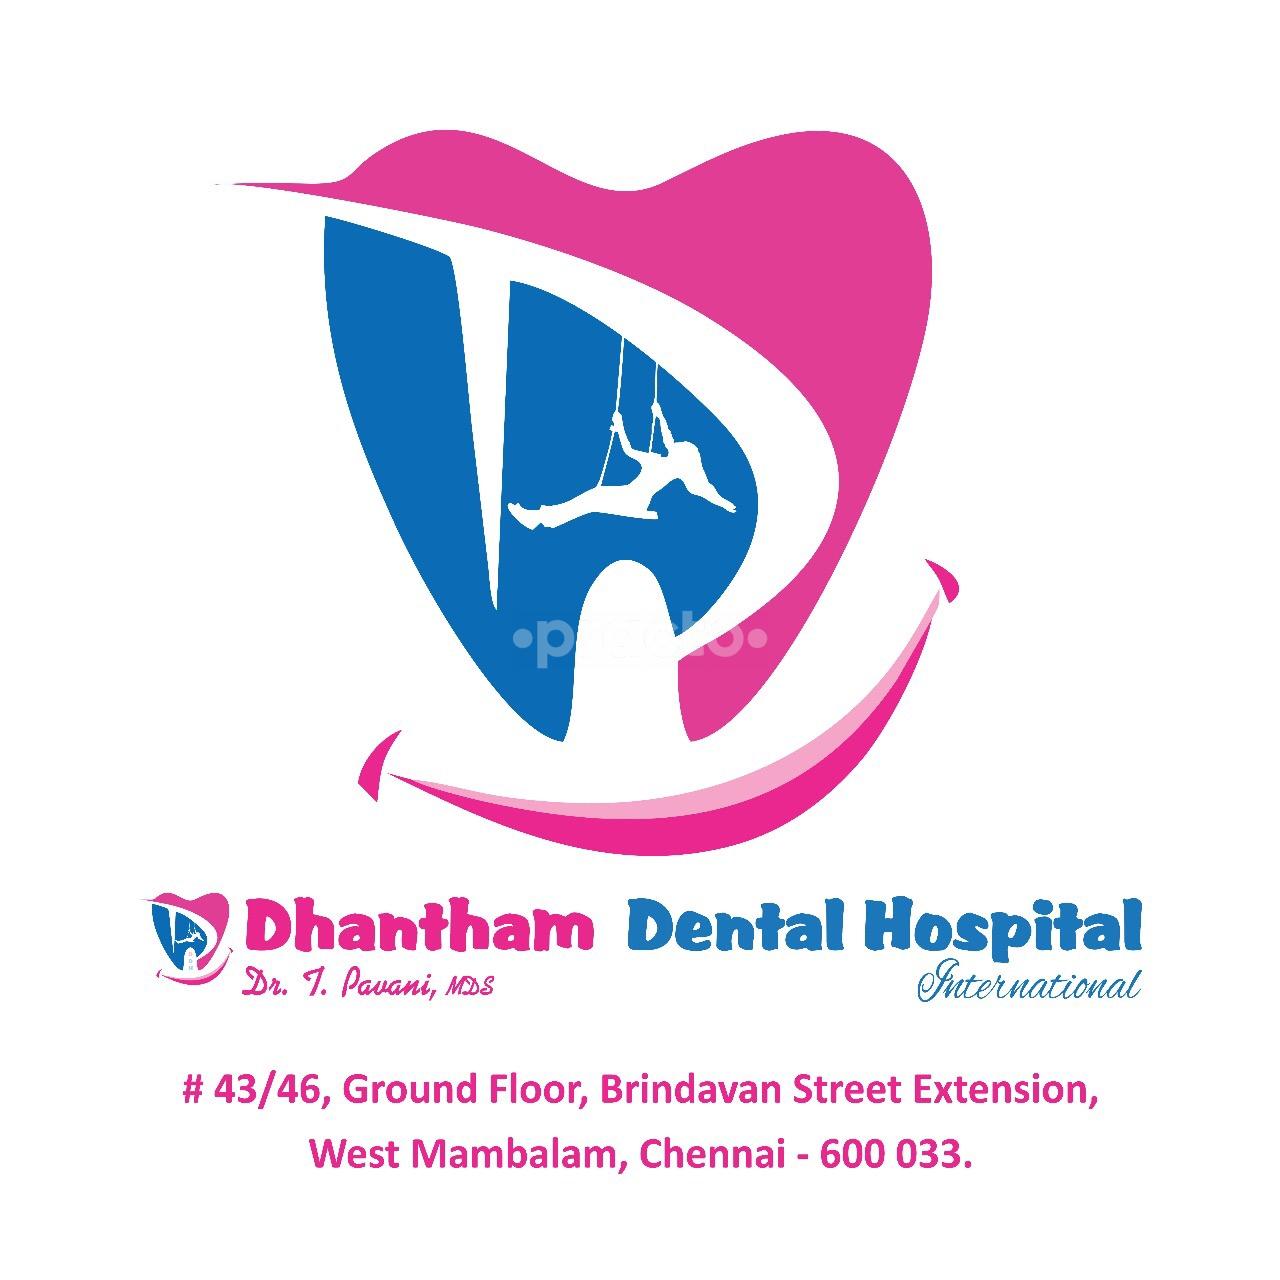 Dhantham Dental Hospital International